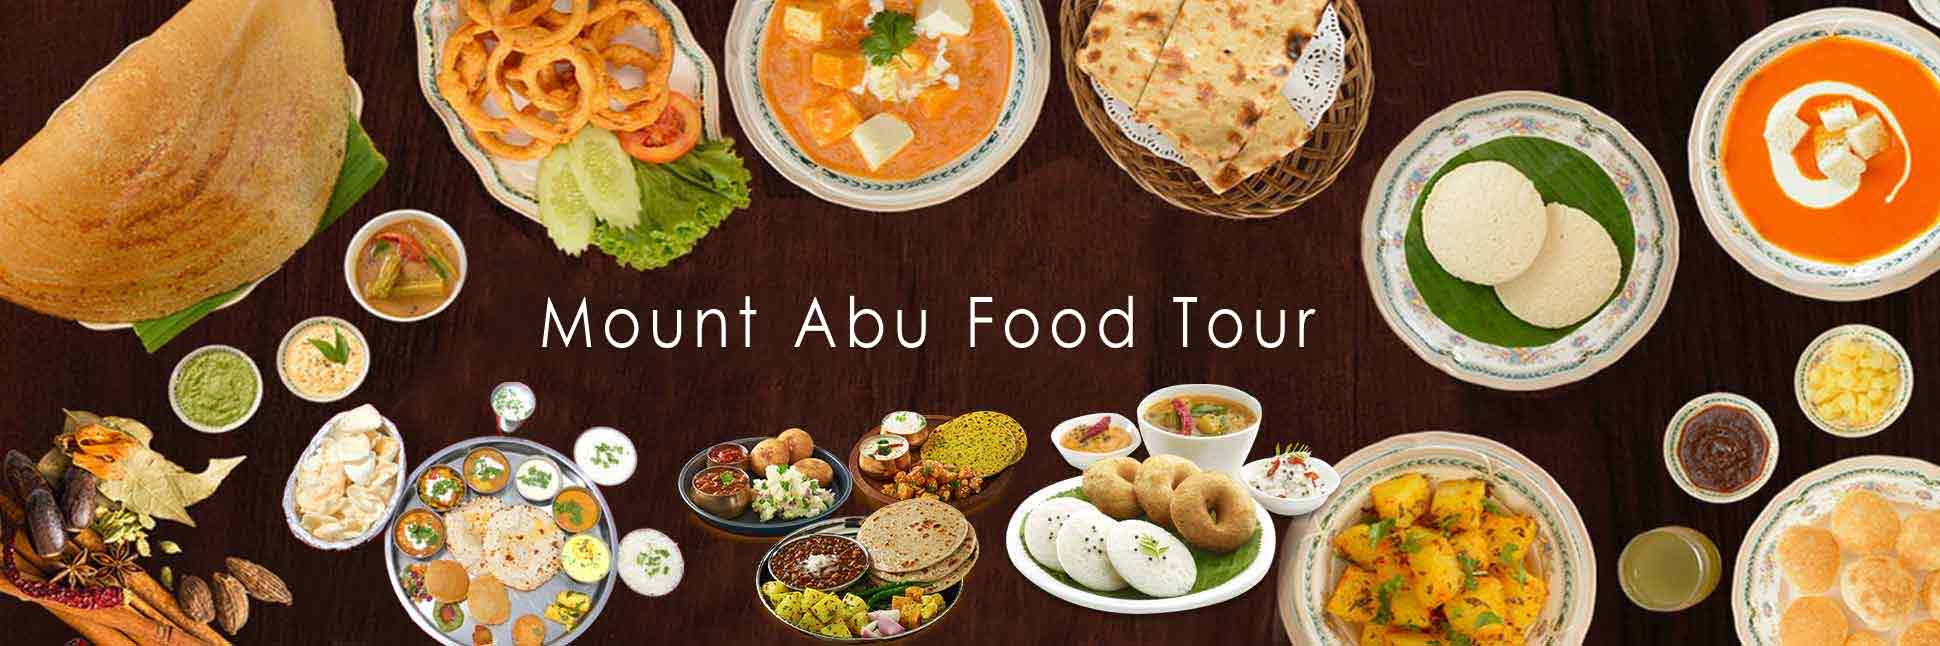 Mount abu Food Tour